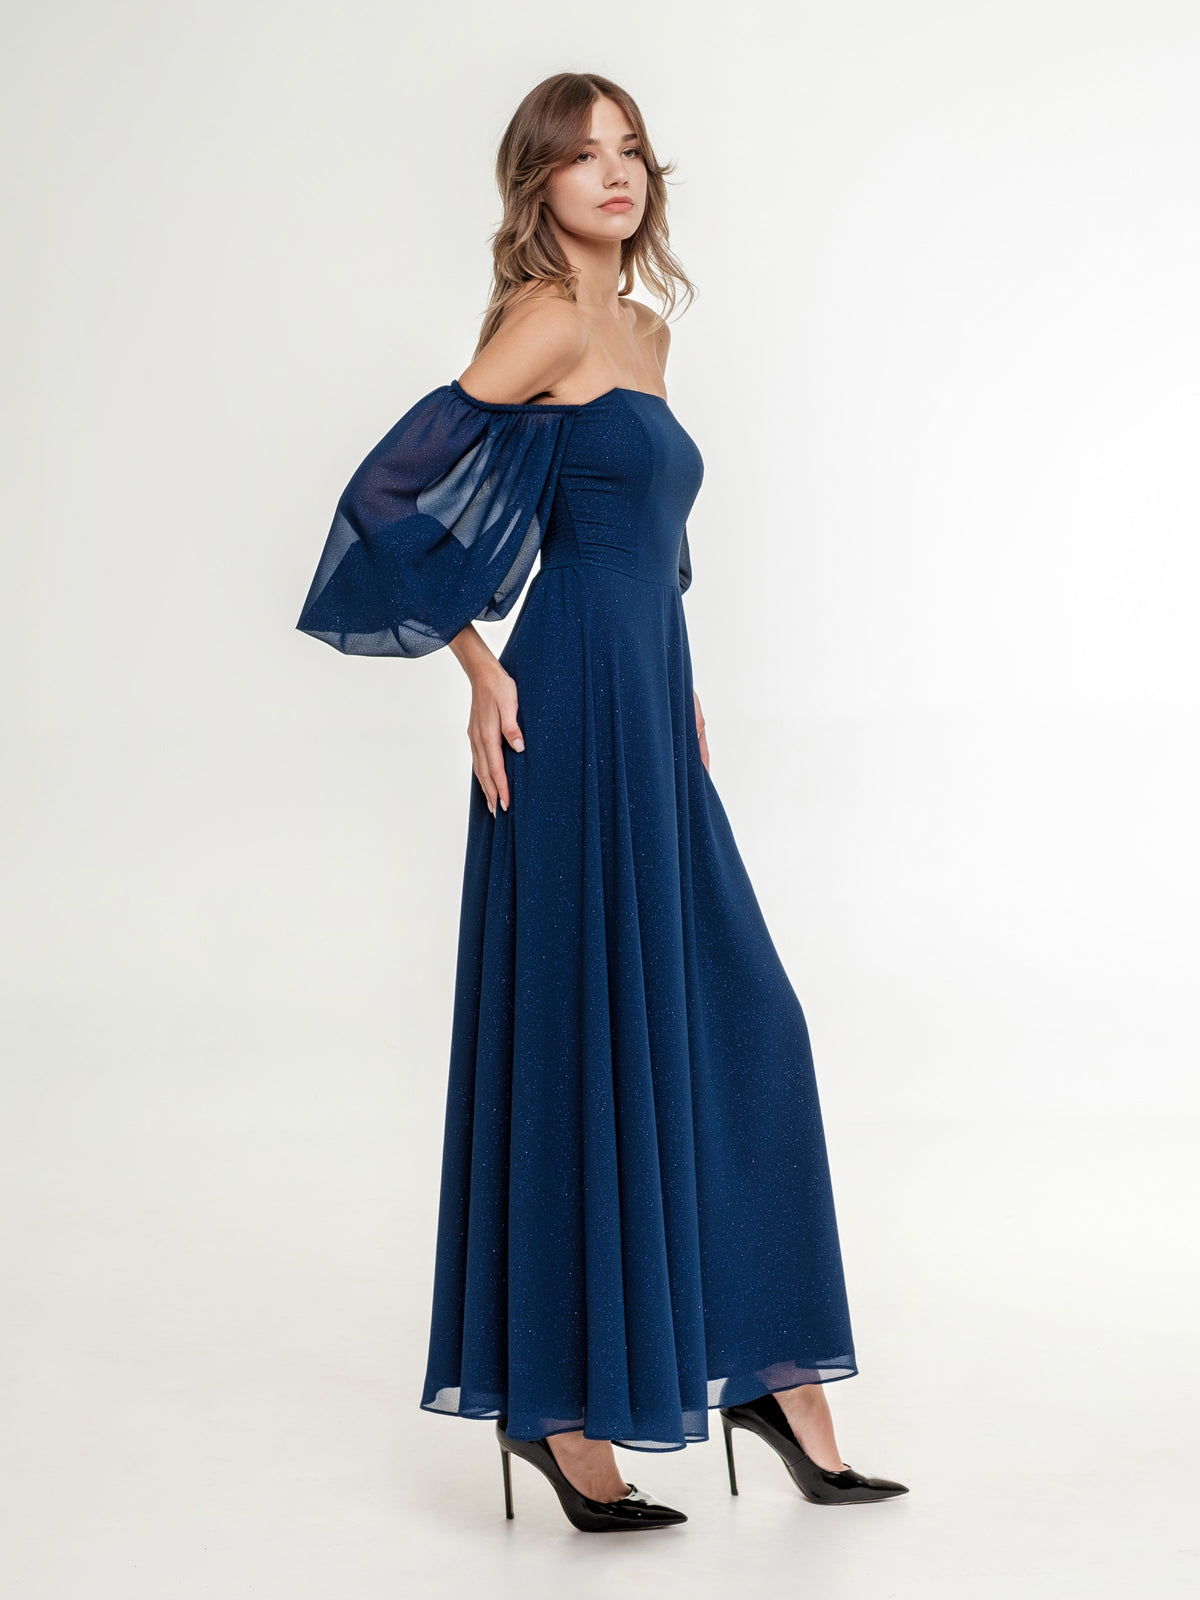 Blue dress with off-shoulder sleeves